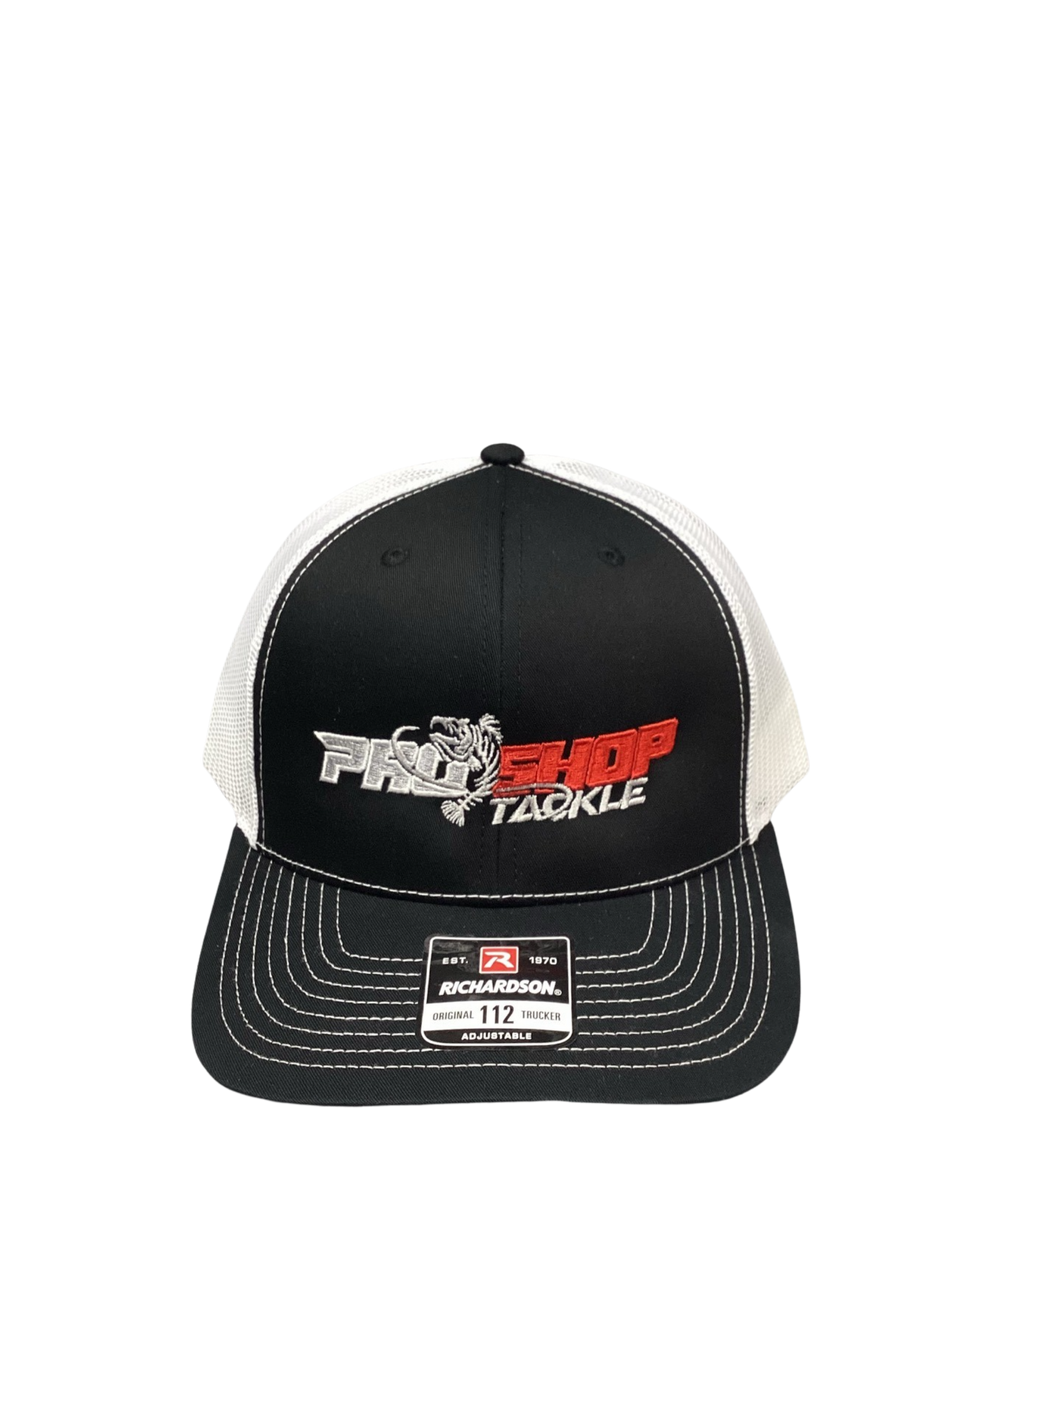 Pro Shop Tackle Trucker Hats